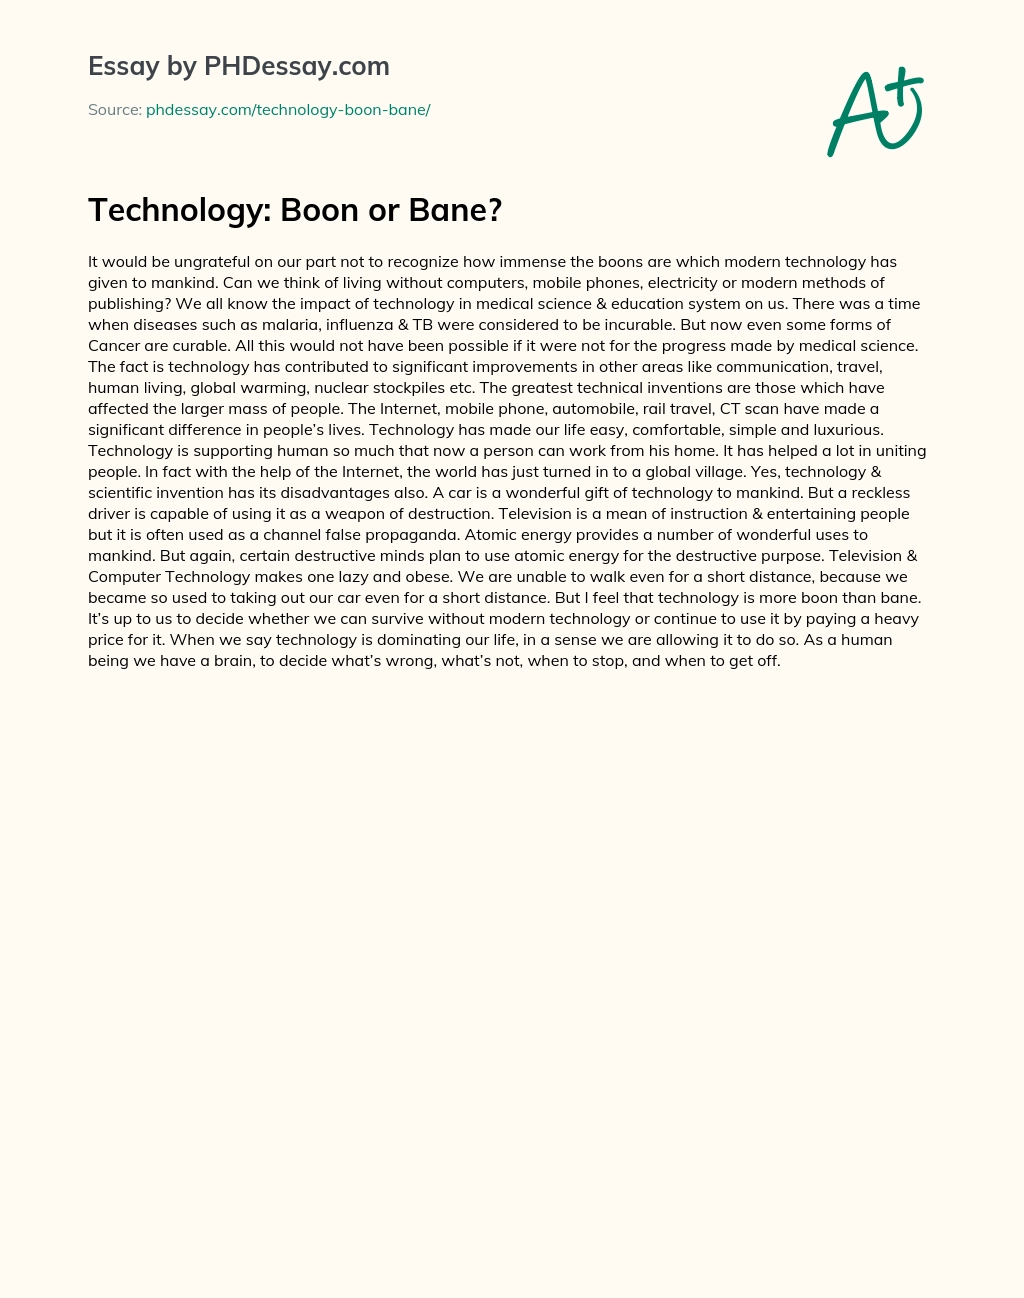 Technology: Boon or Bane? essay